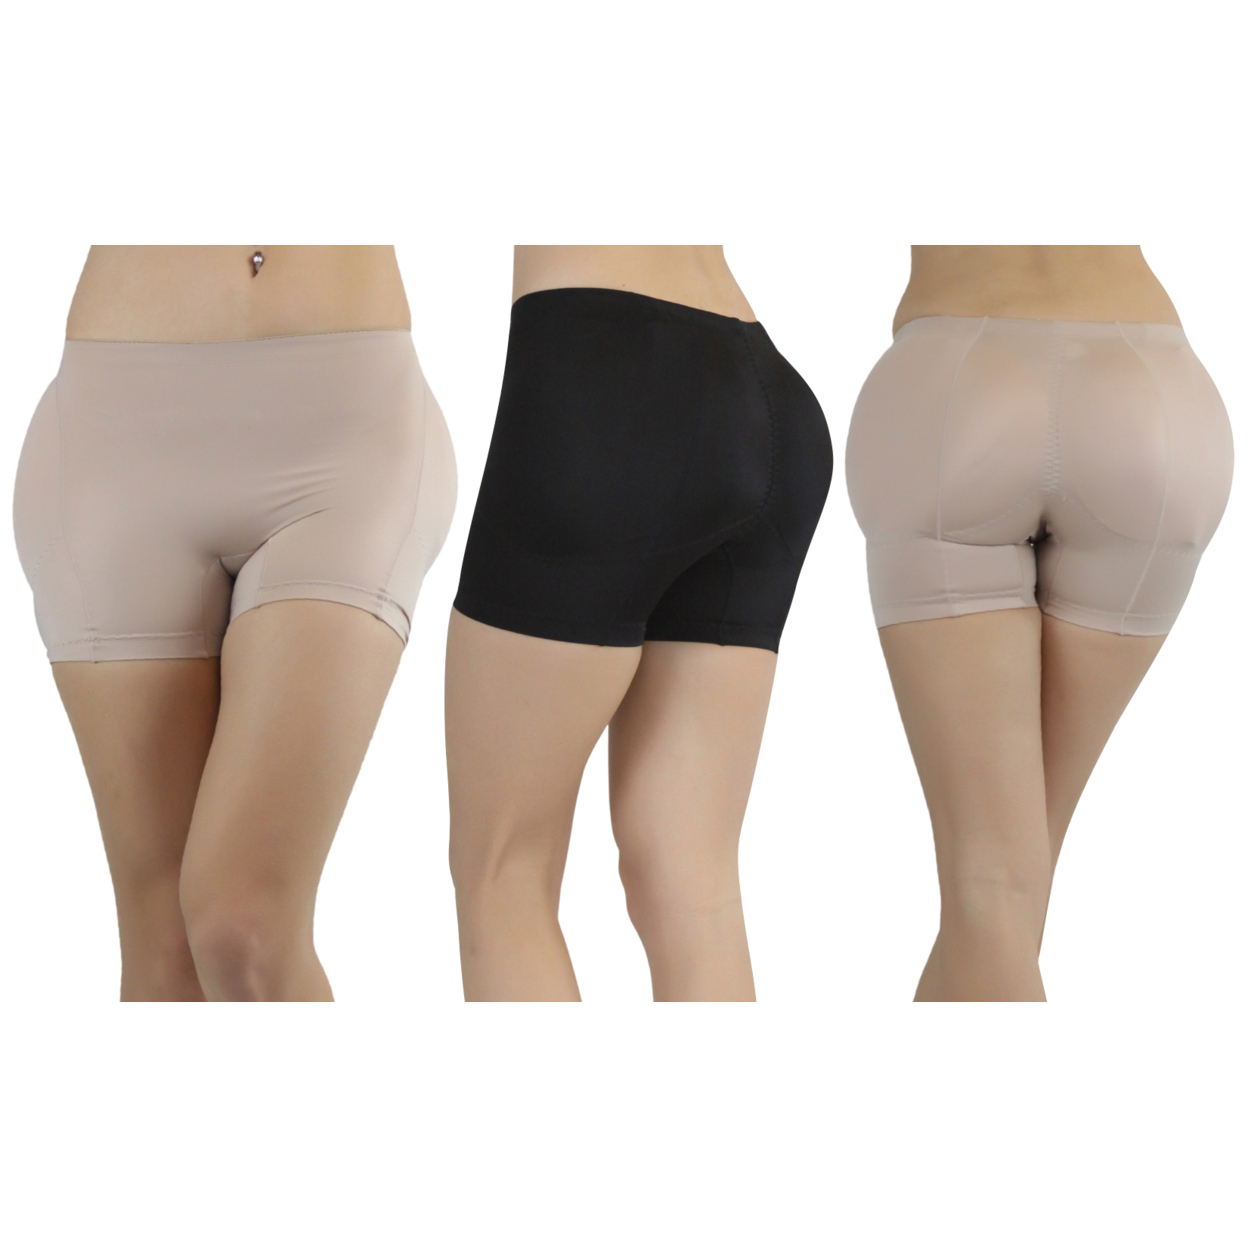 1 Or 2 Pack Of Women Butt And Hip Padded Shaper - Beige & Black, Medium